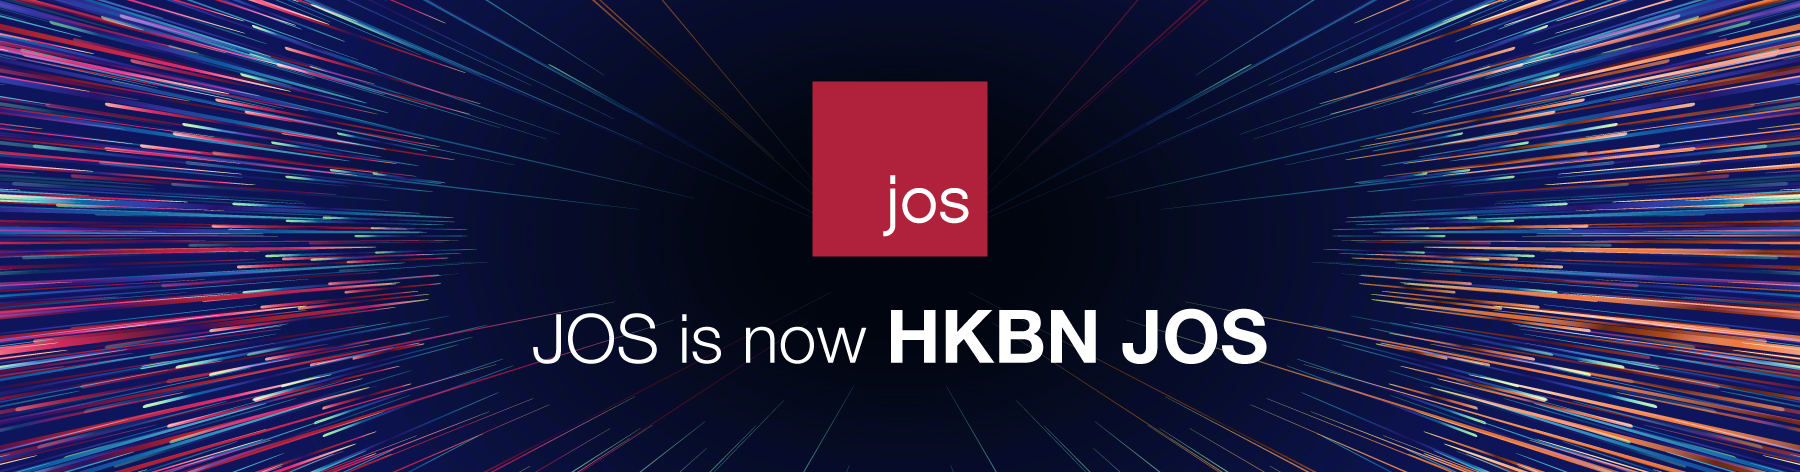 JOS is now HKBN JOS